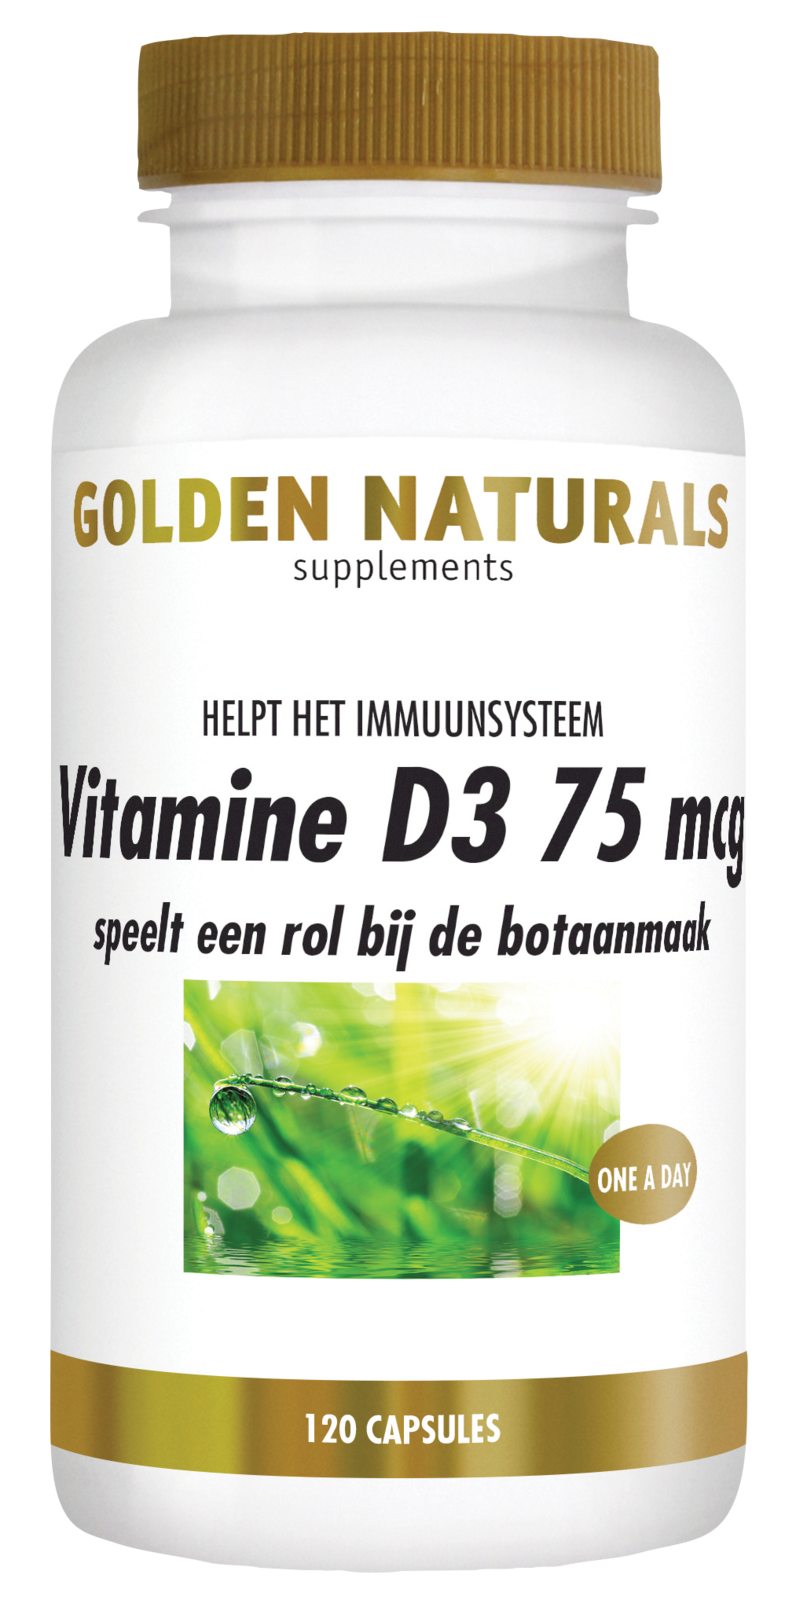 Golden Naturals Vitamine D3 75mcg Capsules kopen